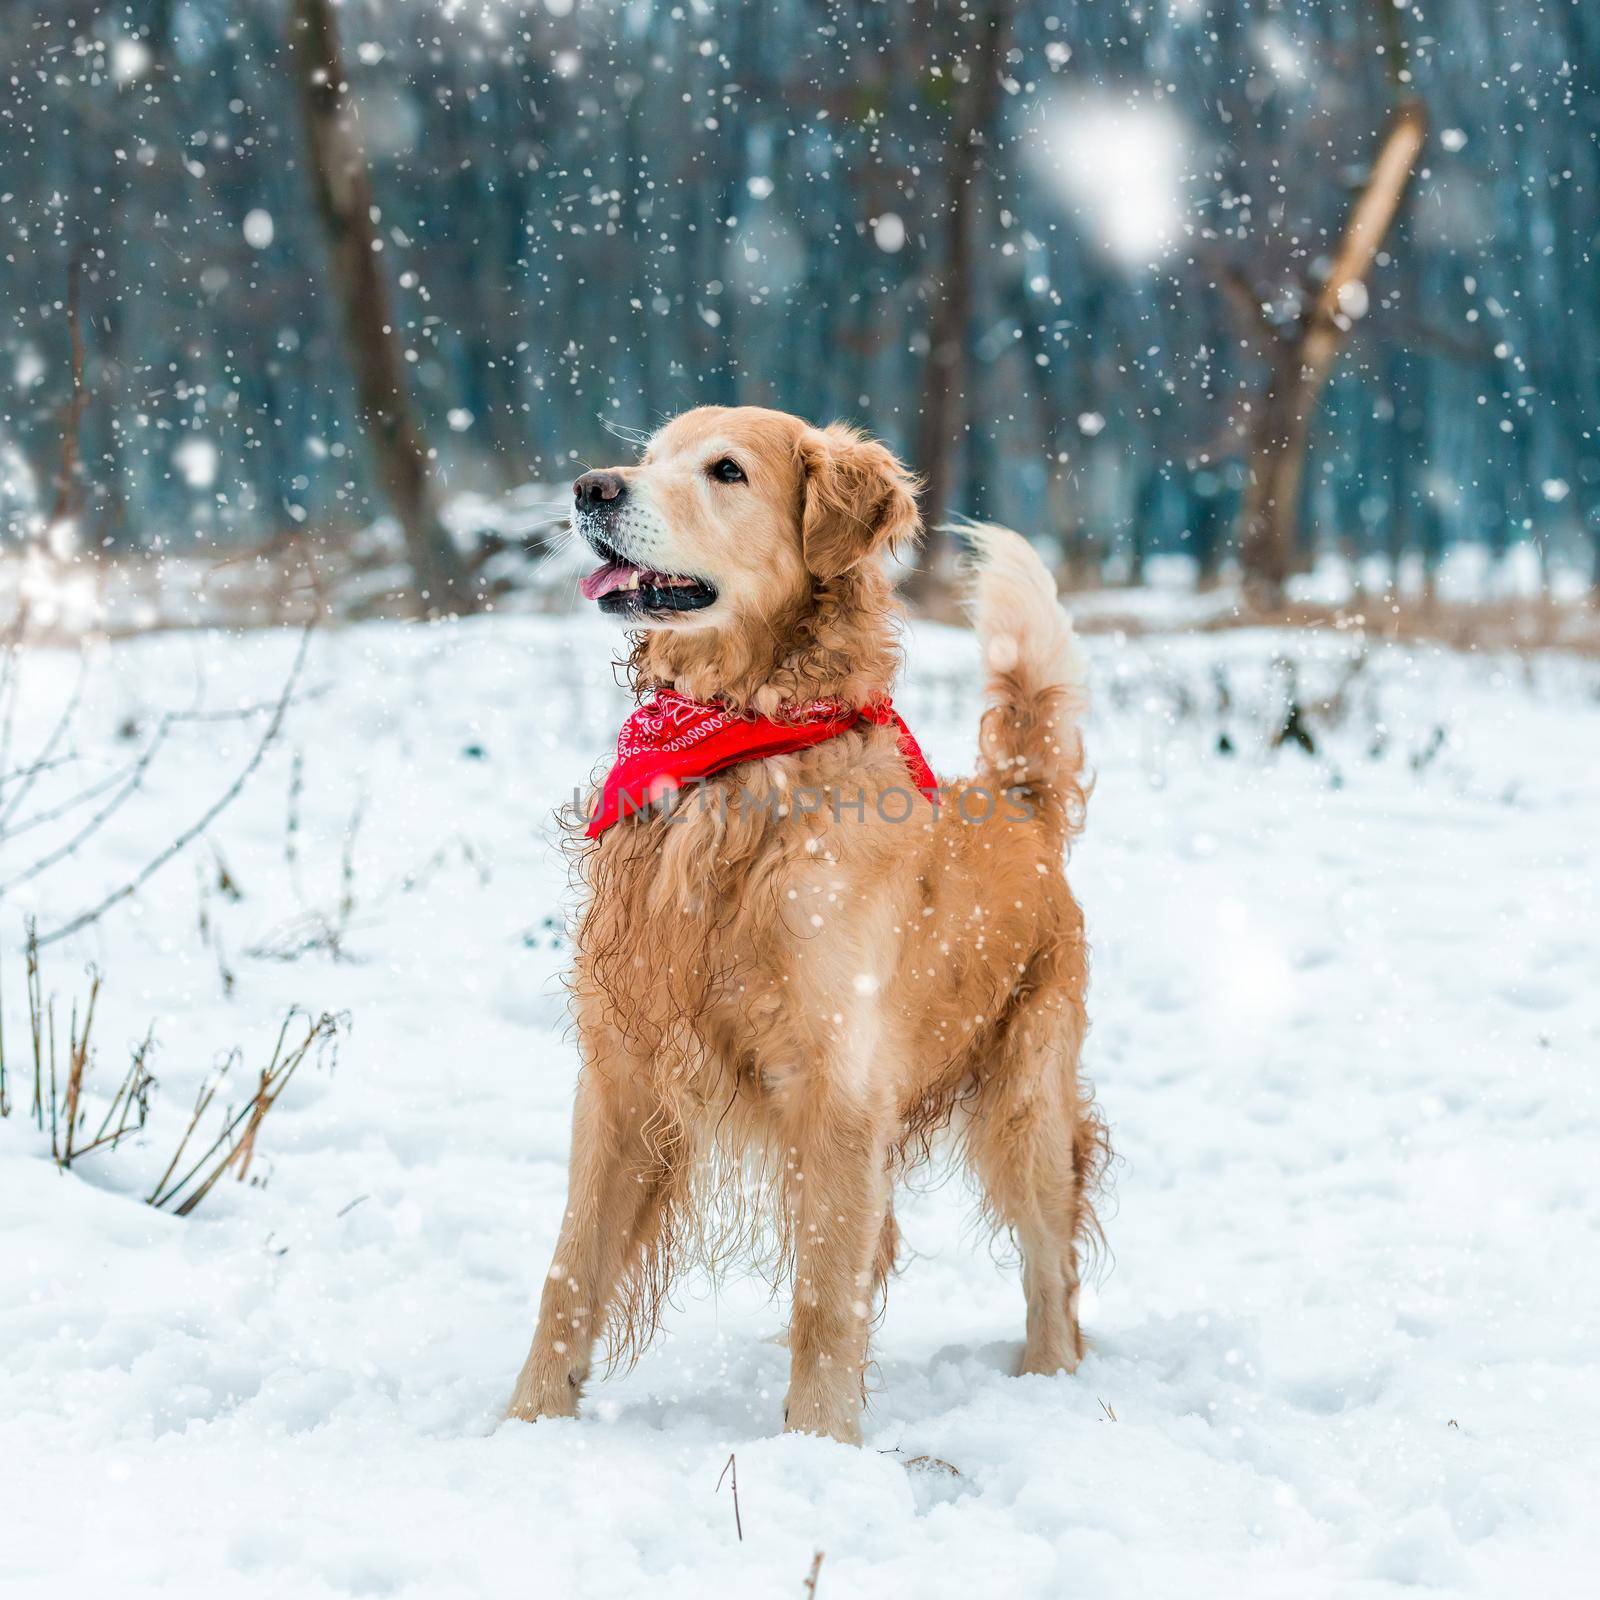 golden retriever walk at the snow in winter park